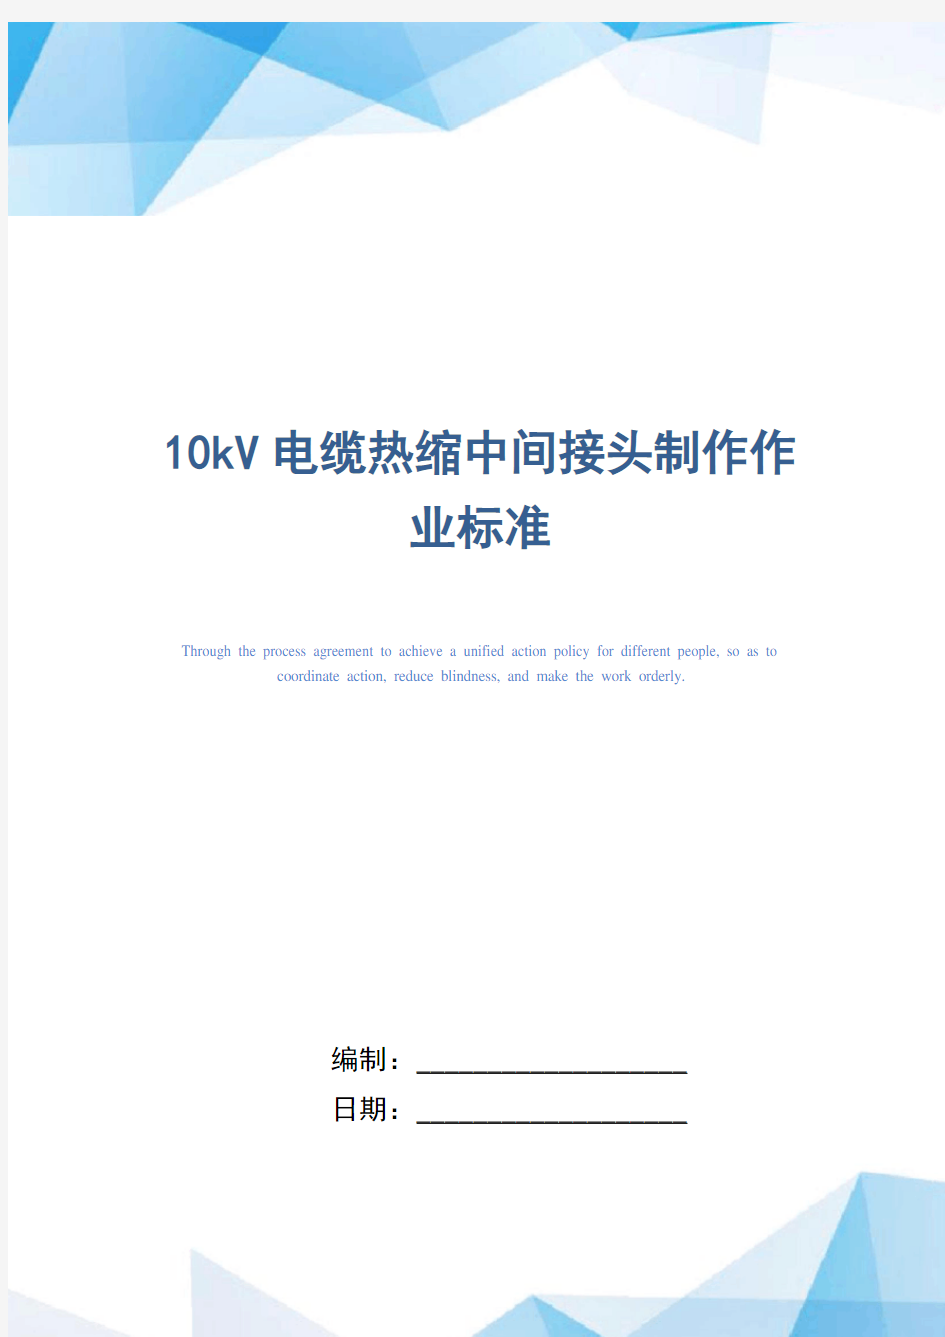 10kV电缆热缩中间接头制作作业标准(正式版)